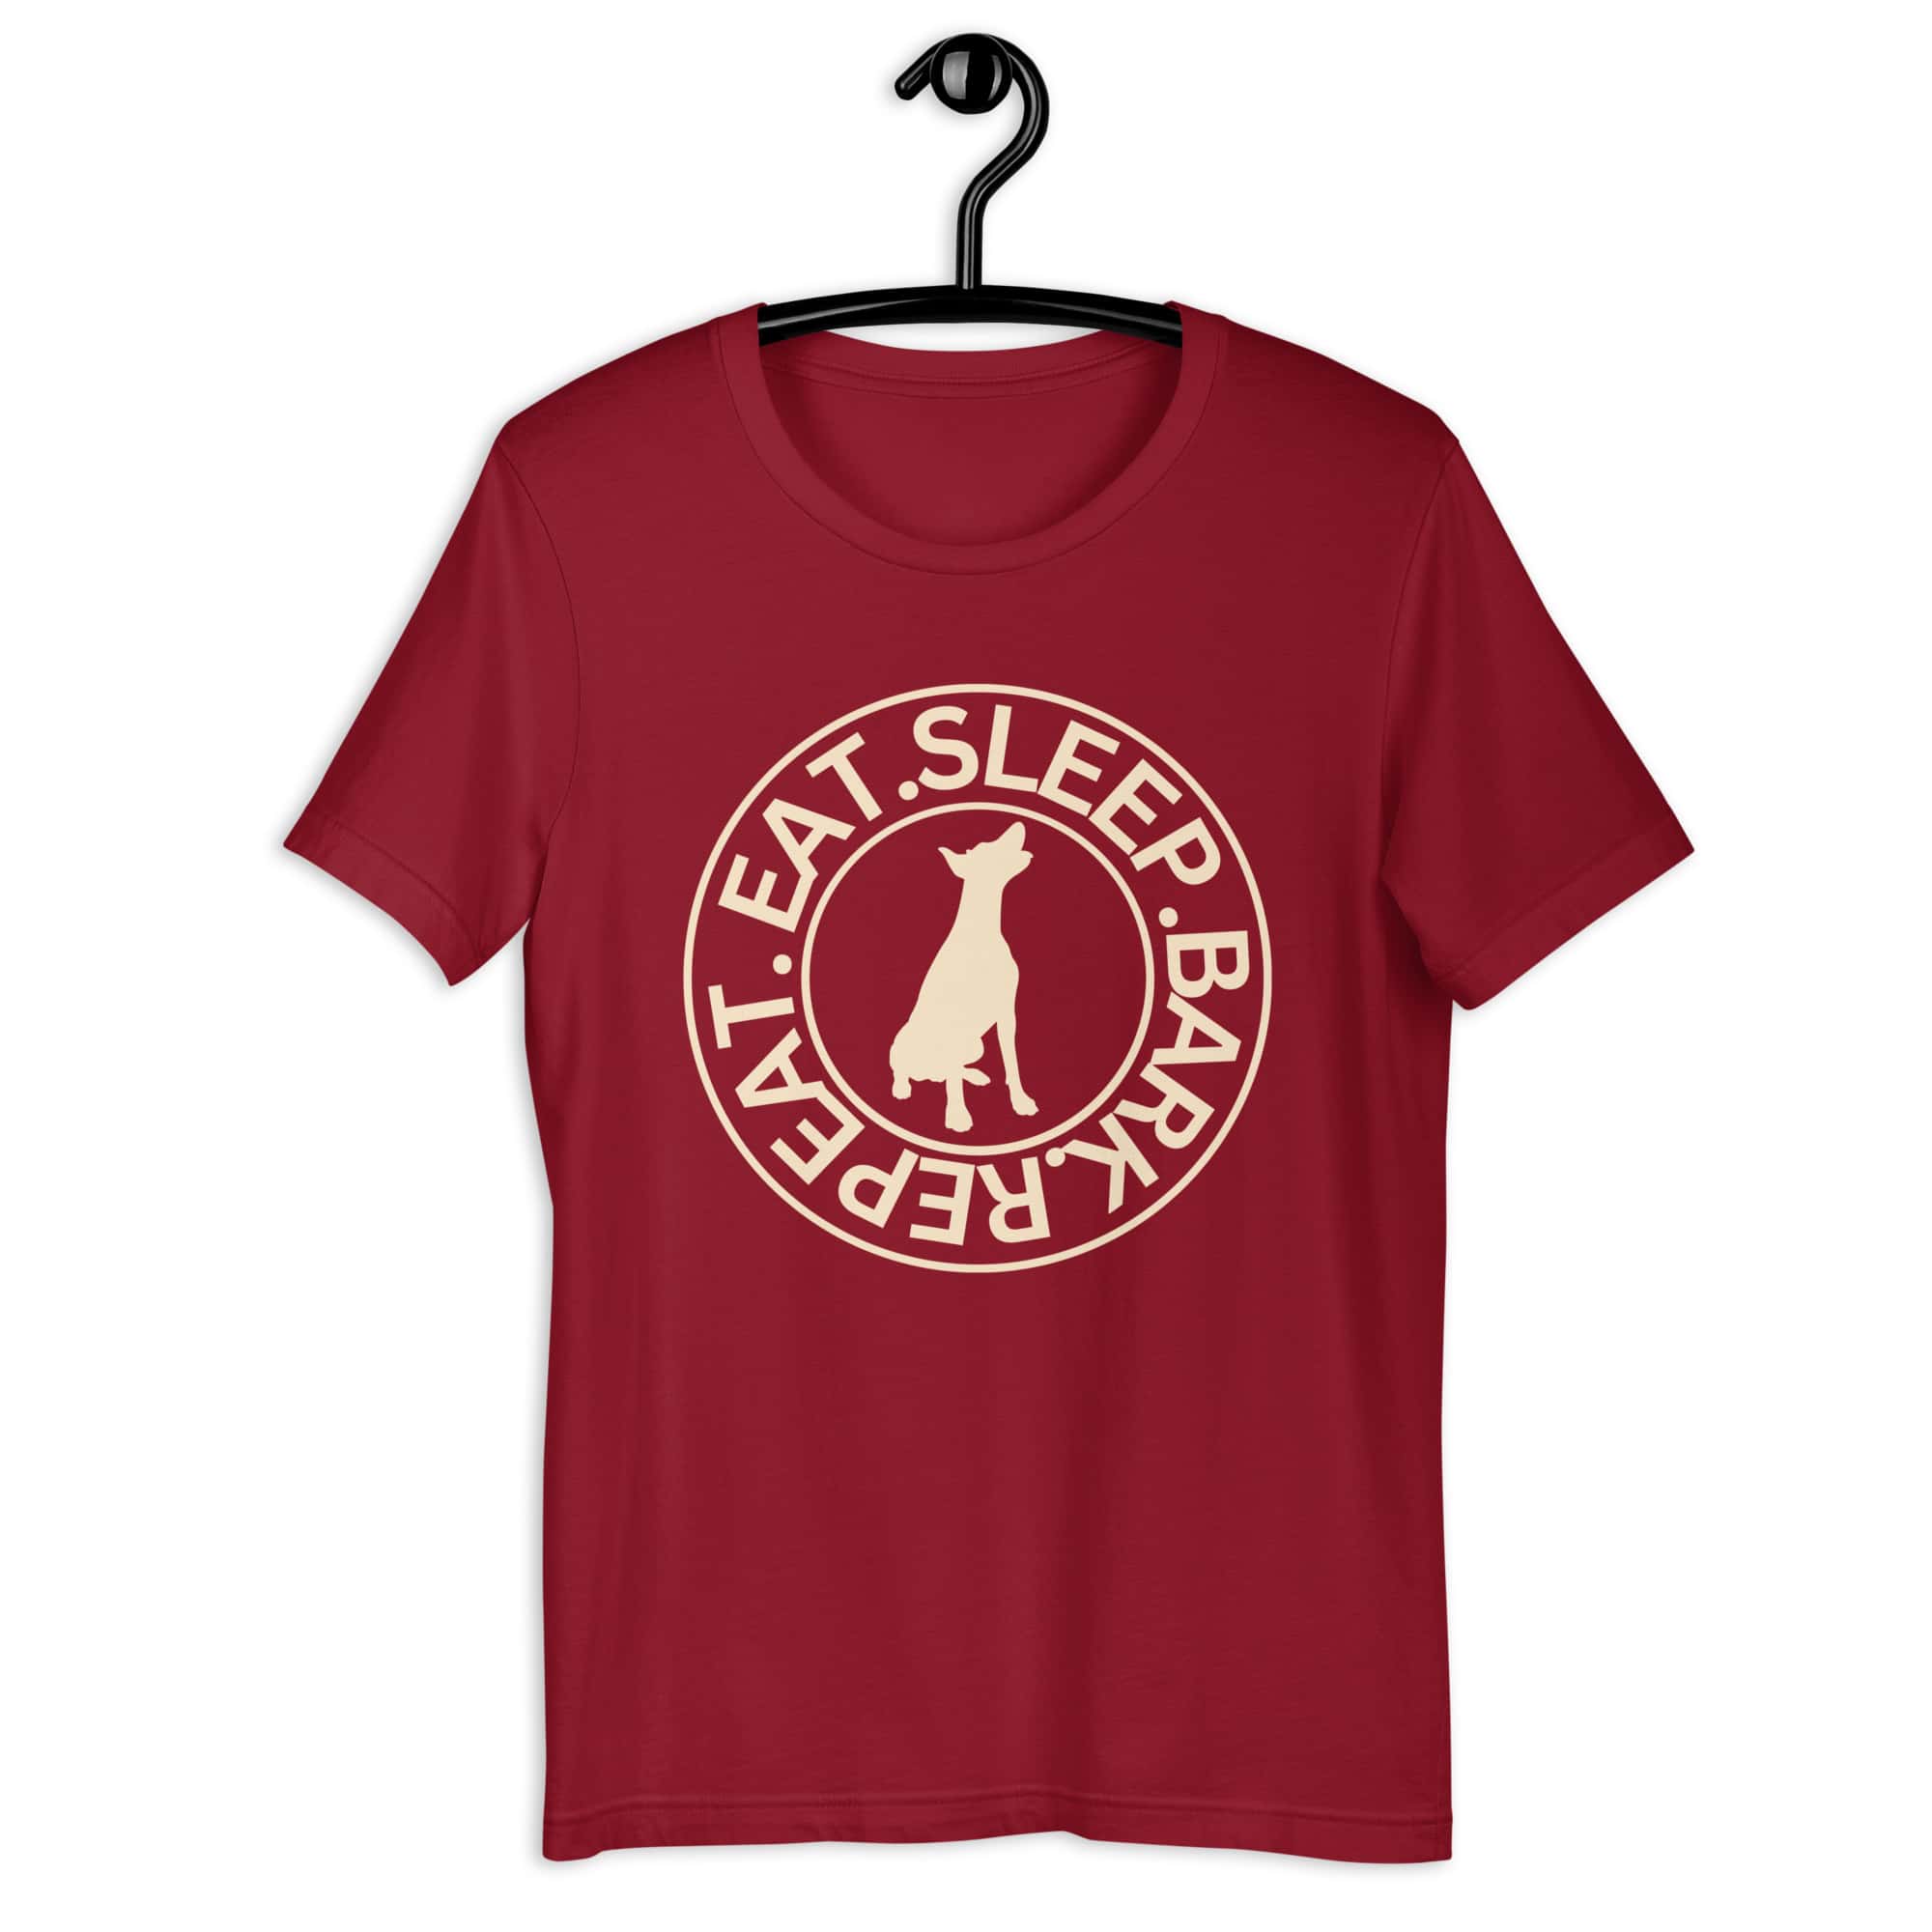 Eat Sleep Bark Repeat Terrier Unisex T-Shirt. Cardinal